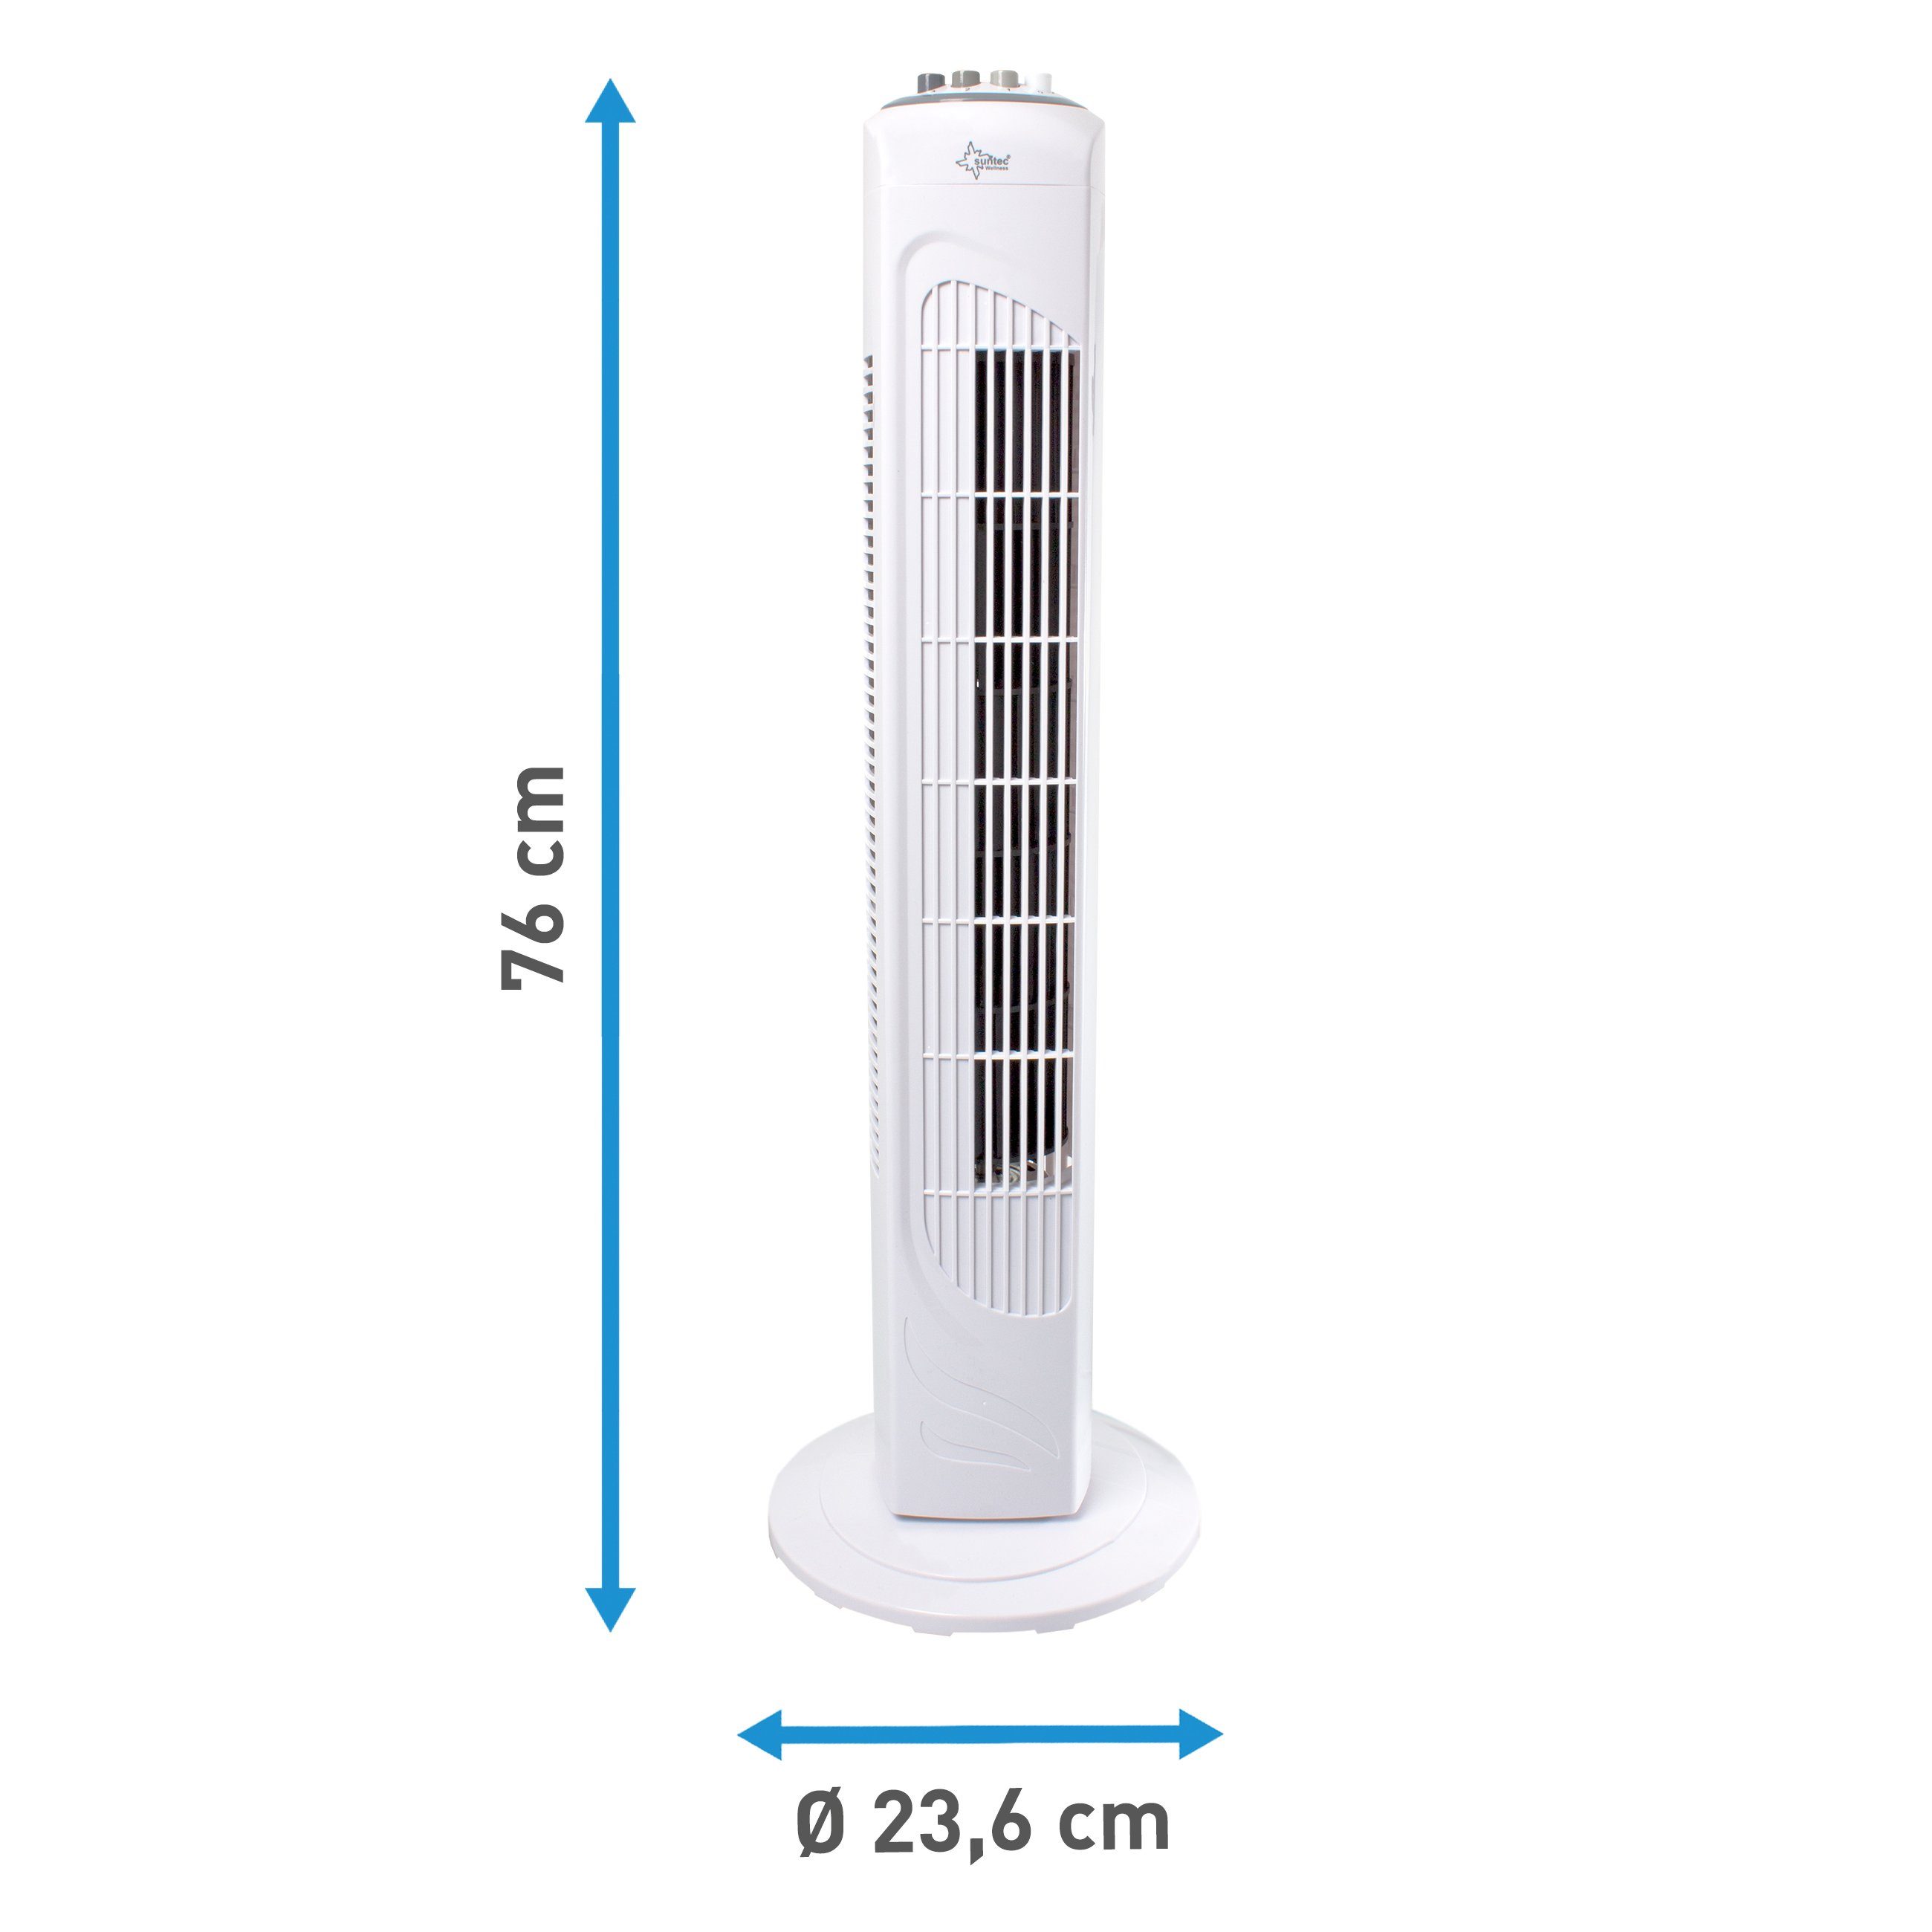 CoolBreeze 45 inkl. Fernbedienung, 7400 Fan, Watt Wellness Ventilator Turmventilator Suntec Soft-Touch-Bedienung, TV,